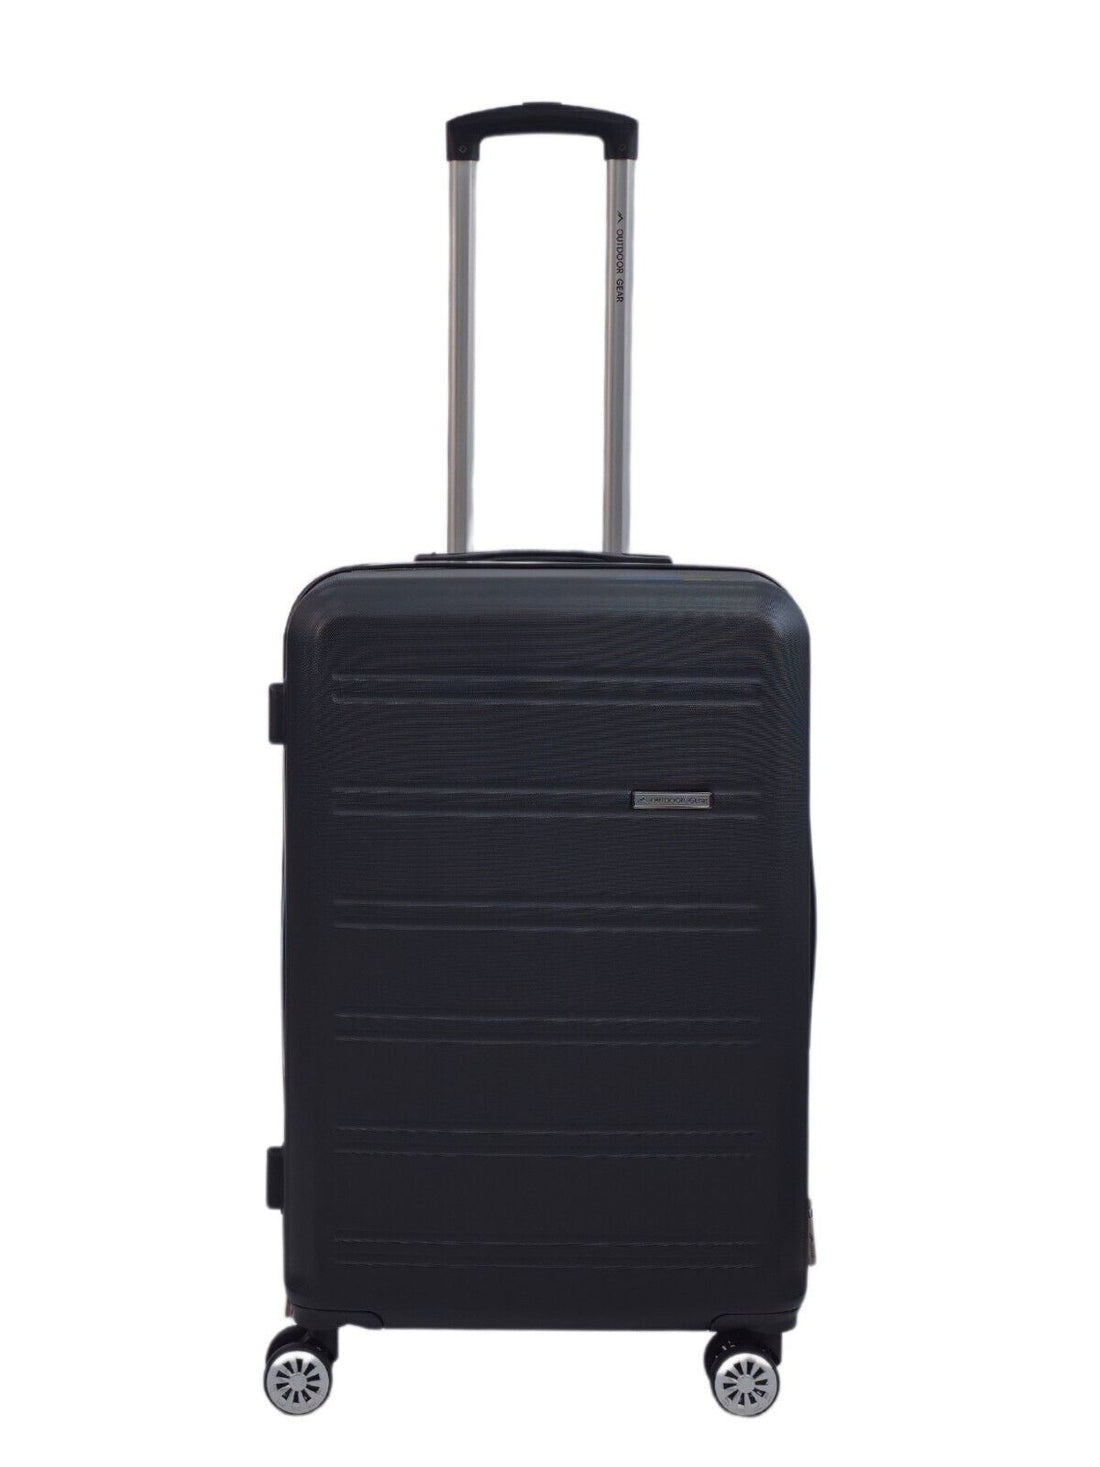 Hardshell Black Suitcase Robust ABS Lightweight Luggage Bag